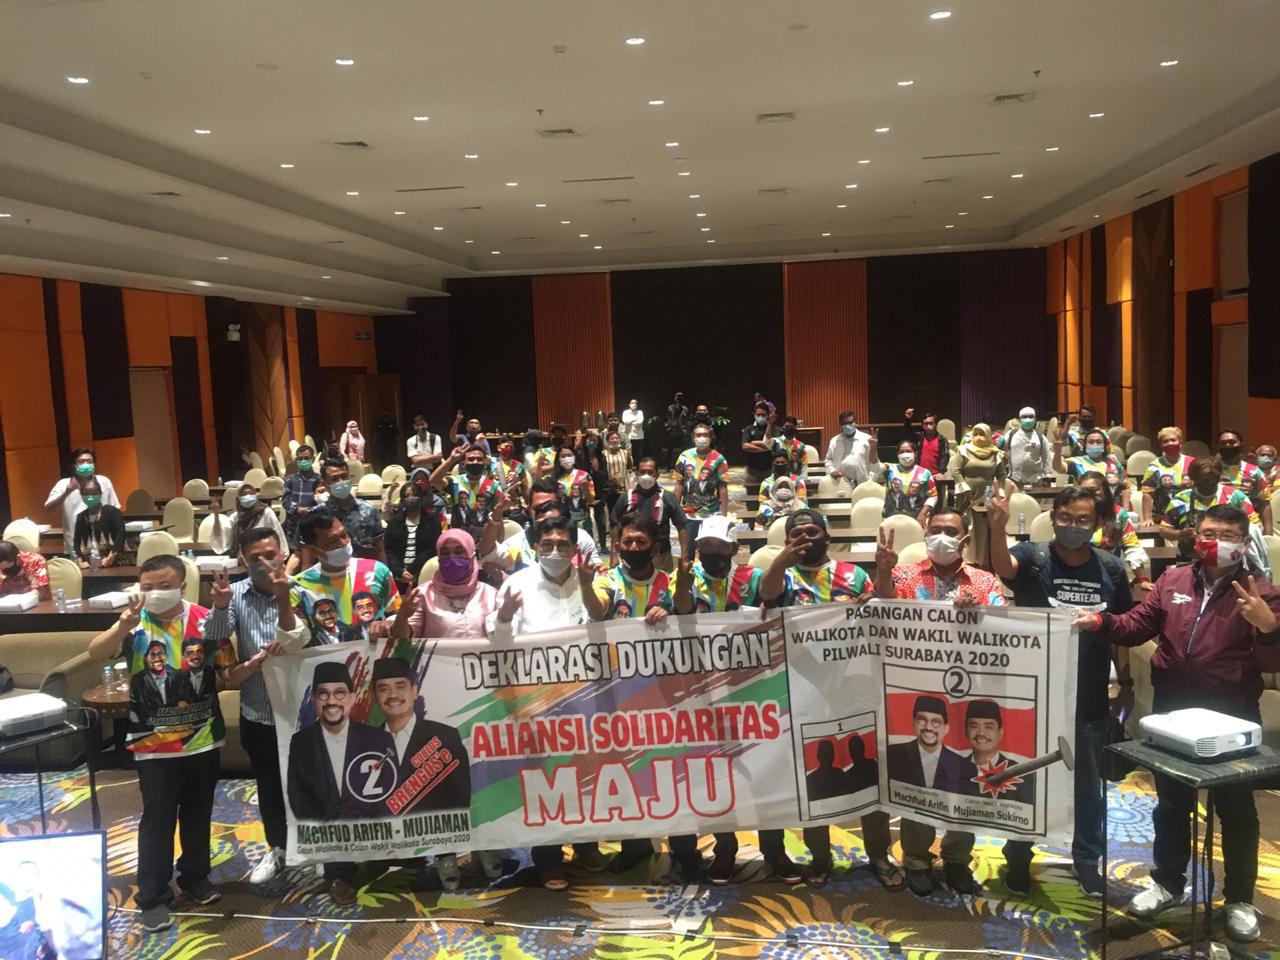 DPW PSI Deklarasi Menangkan Machfud Arifin-Mujiaman